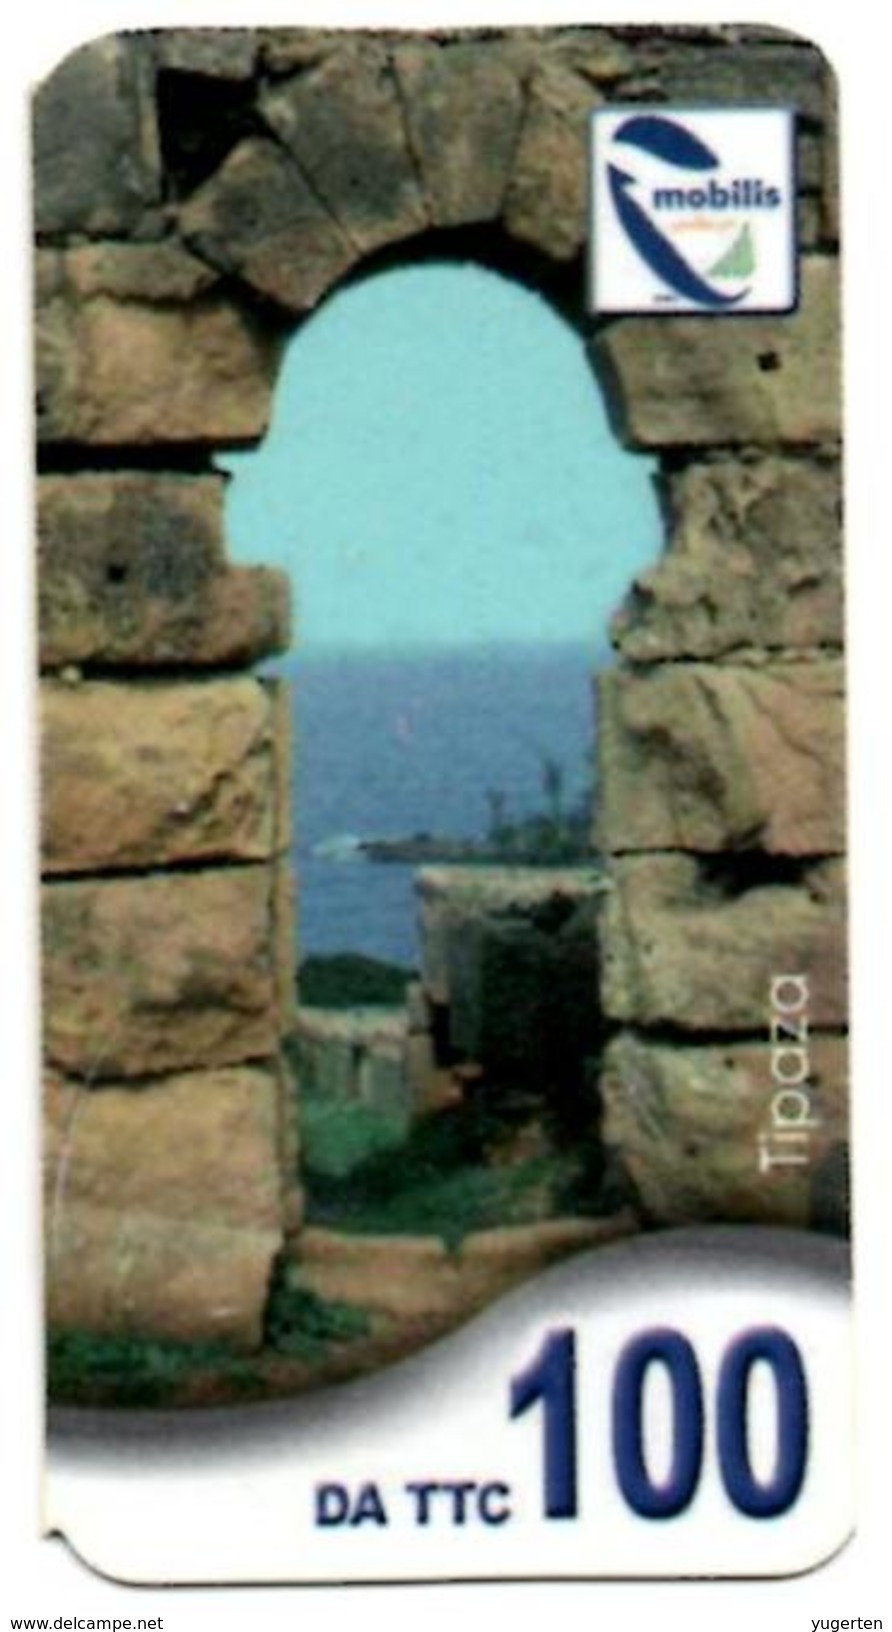 Phonecard Télécarte Mobilis Algérie Algeria - Tipaza Tipasa Roman Ruins Telefonkarte Telefonica - Algérie